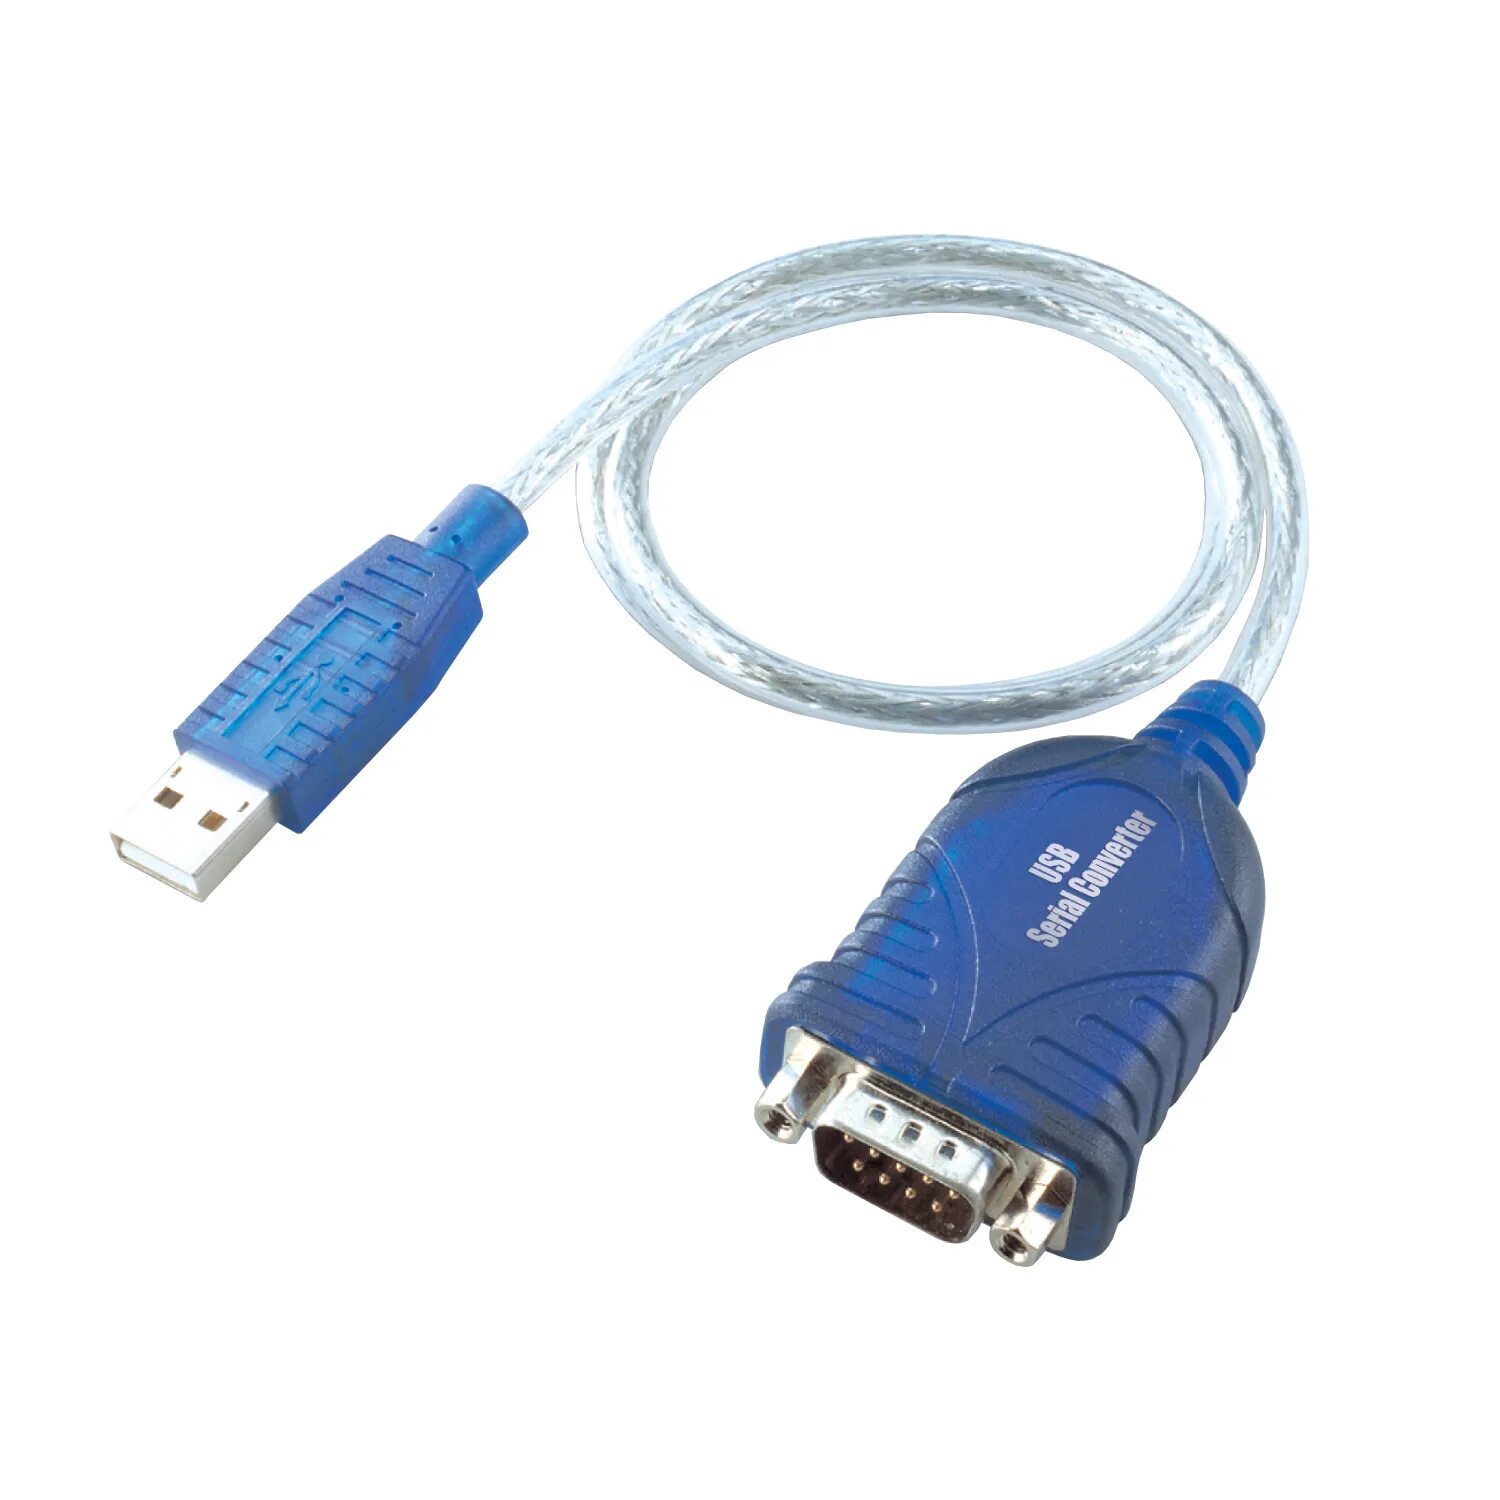 Переходник com(rs232) - USB. Переходник rs232 to USB. USB-rs232 prolific pl-2303. Адаптер 232